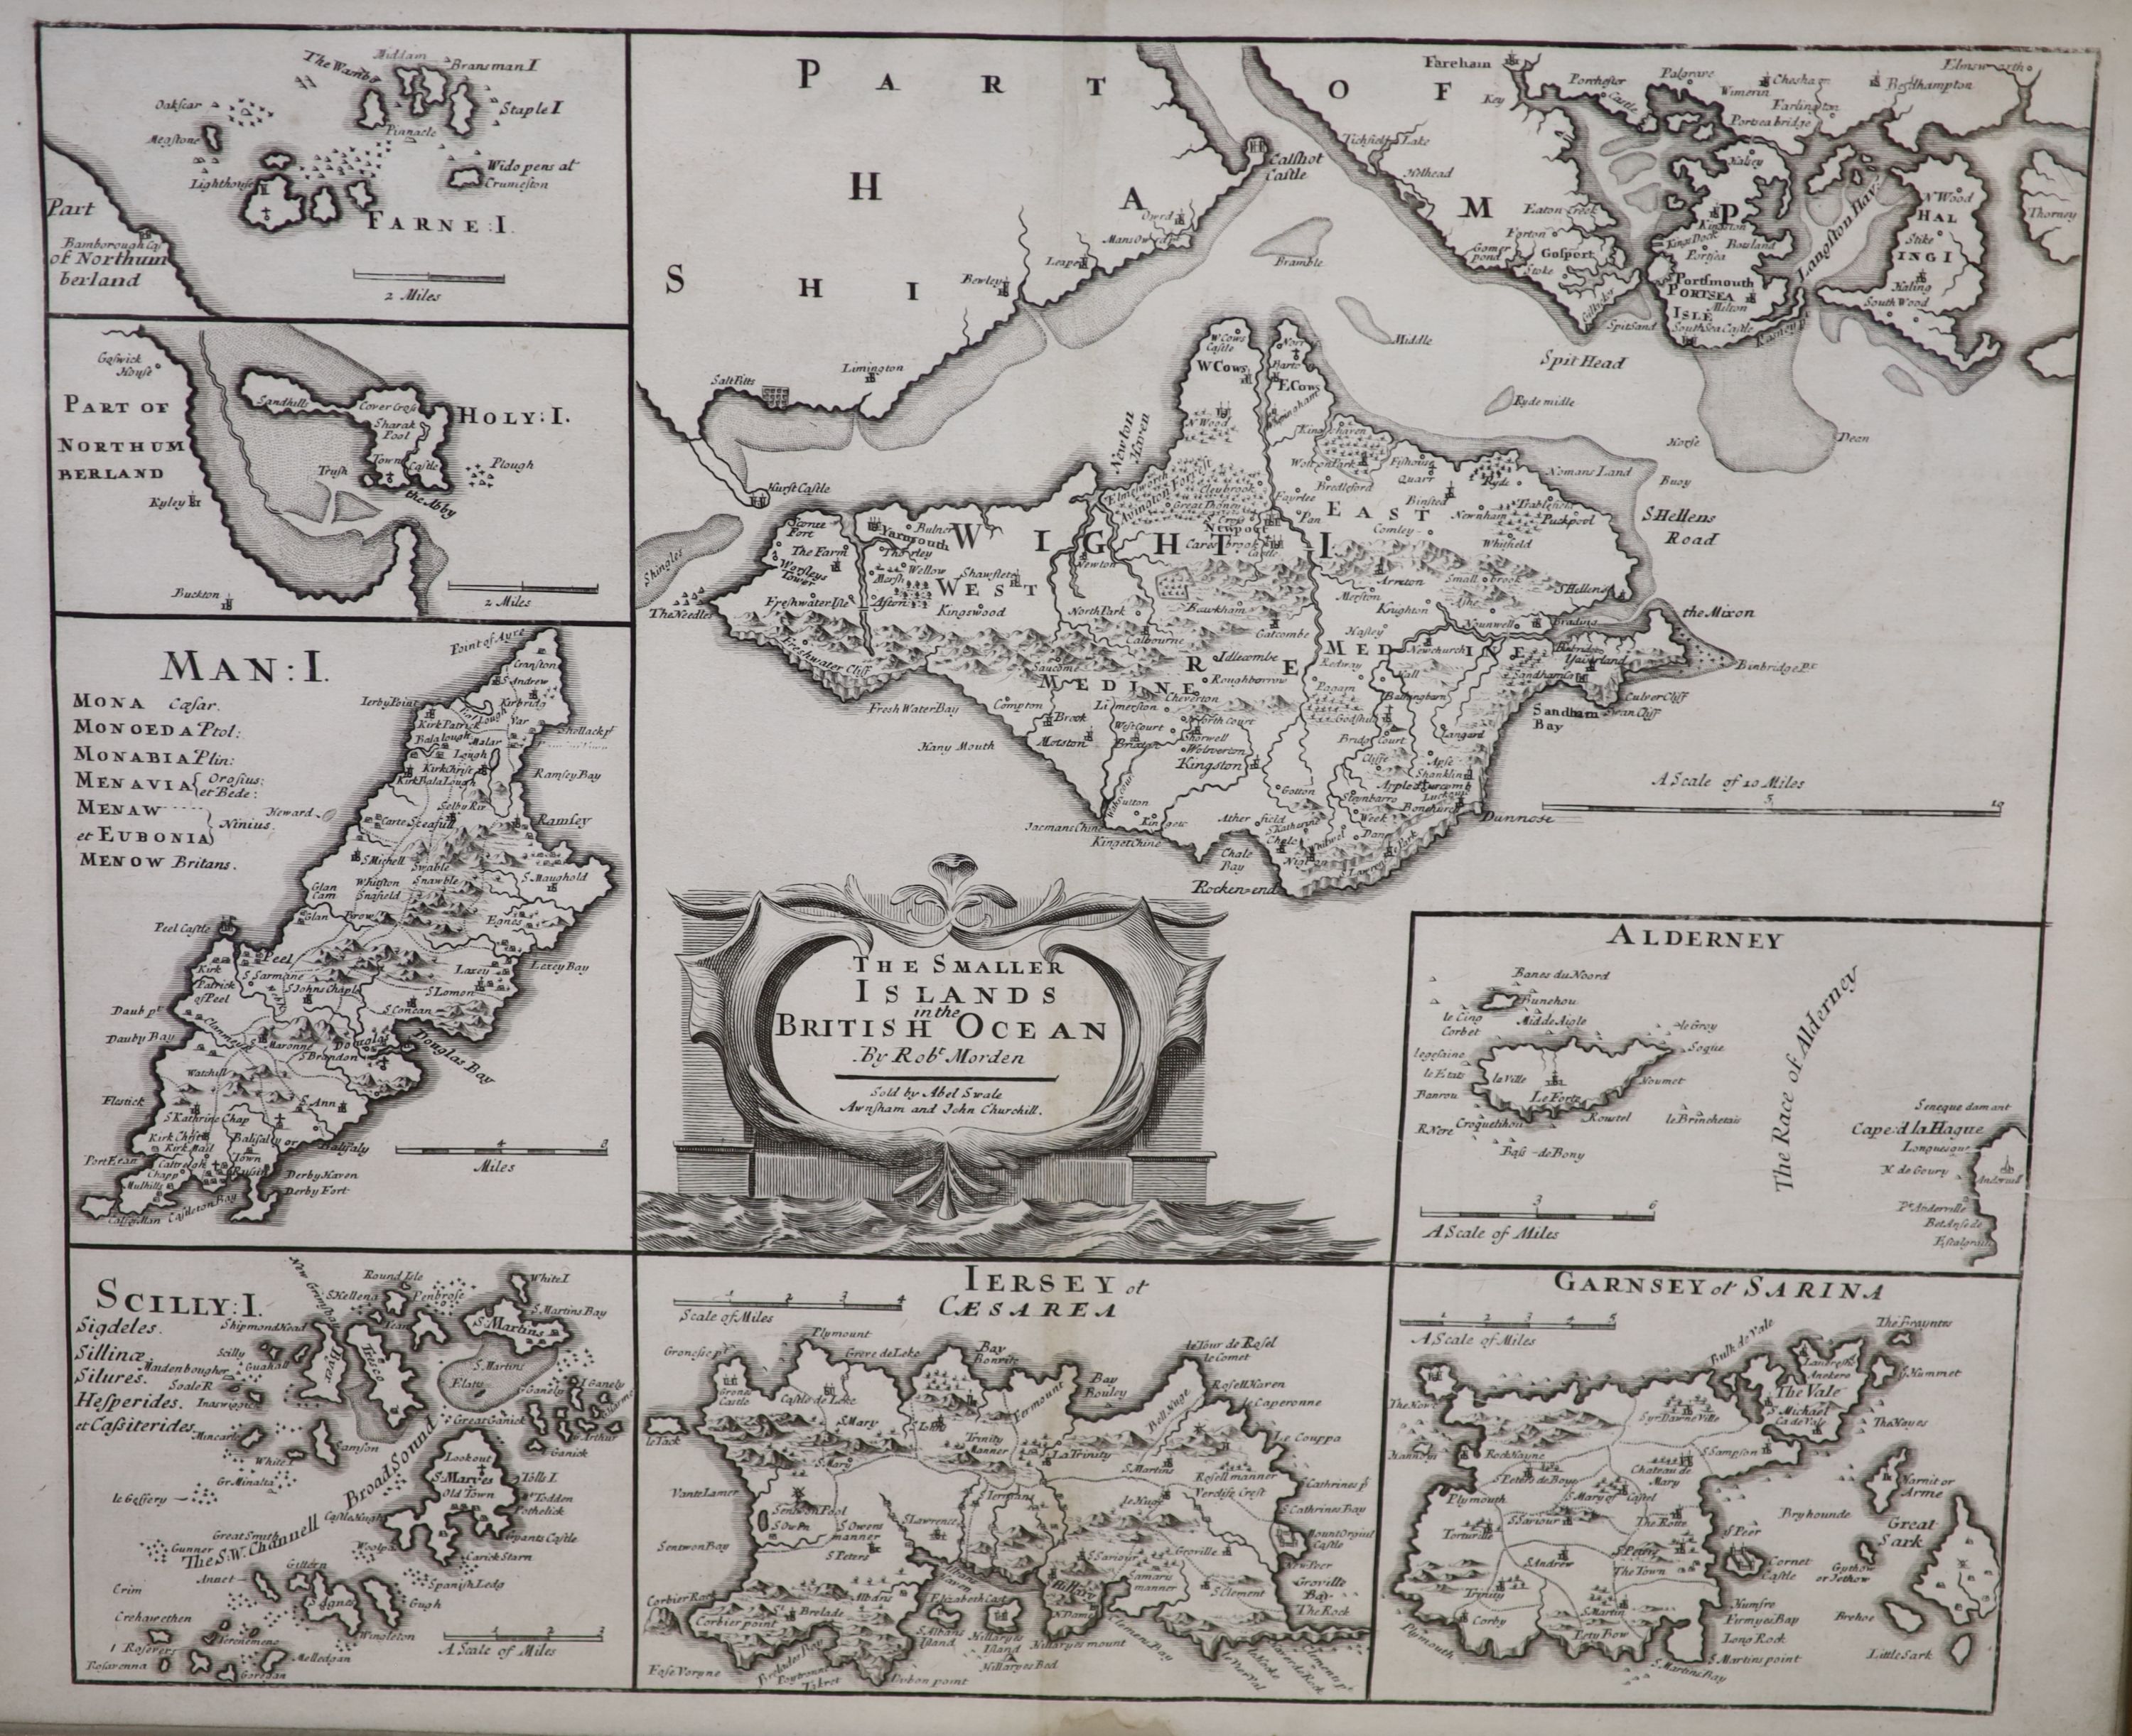 Robert Mordan, engraving, The Smaller Islands in the British Ocean, overall 39 x 48cm